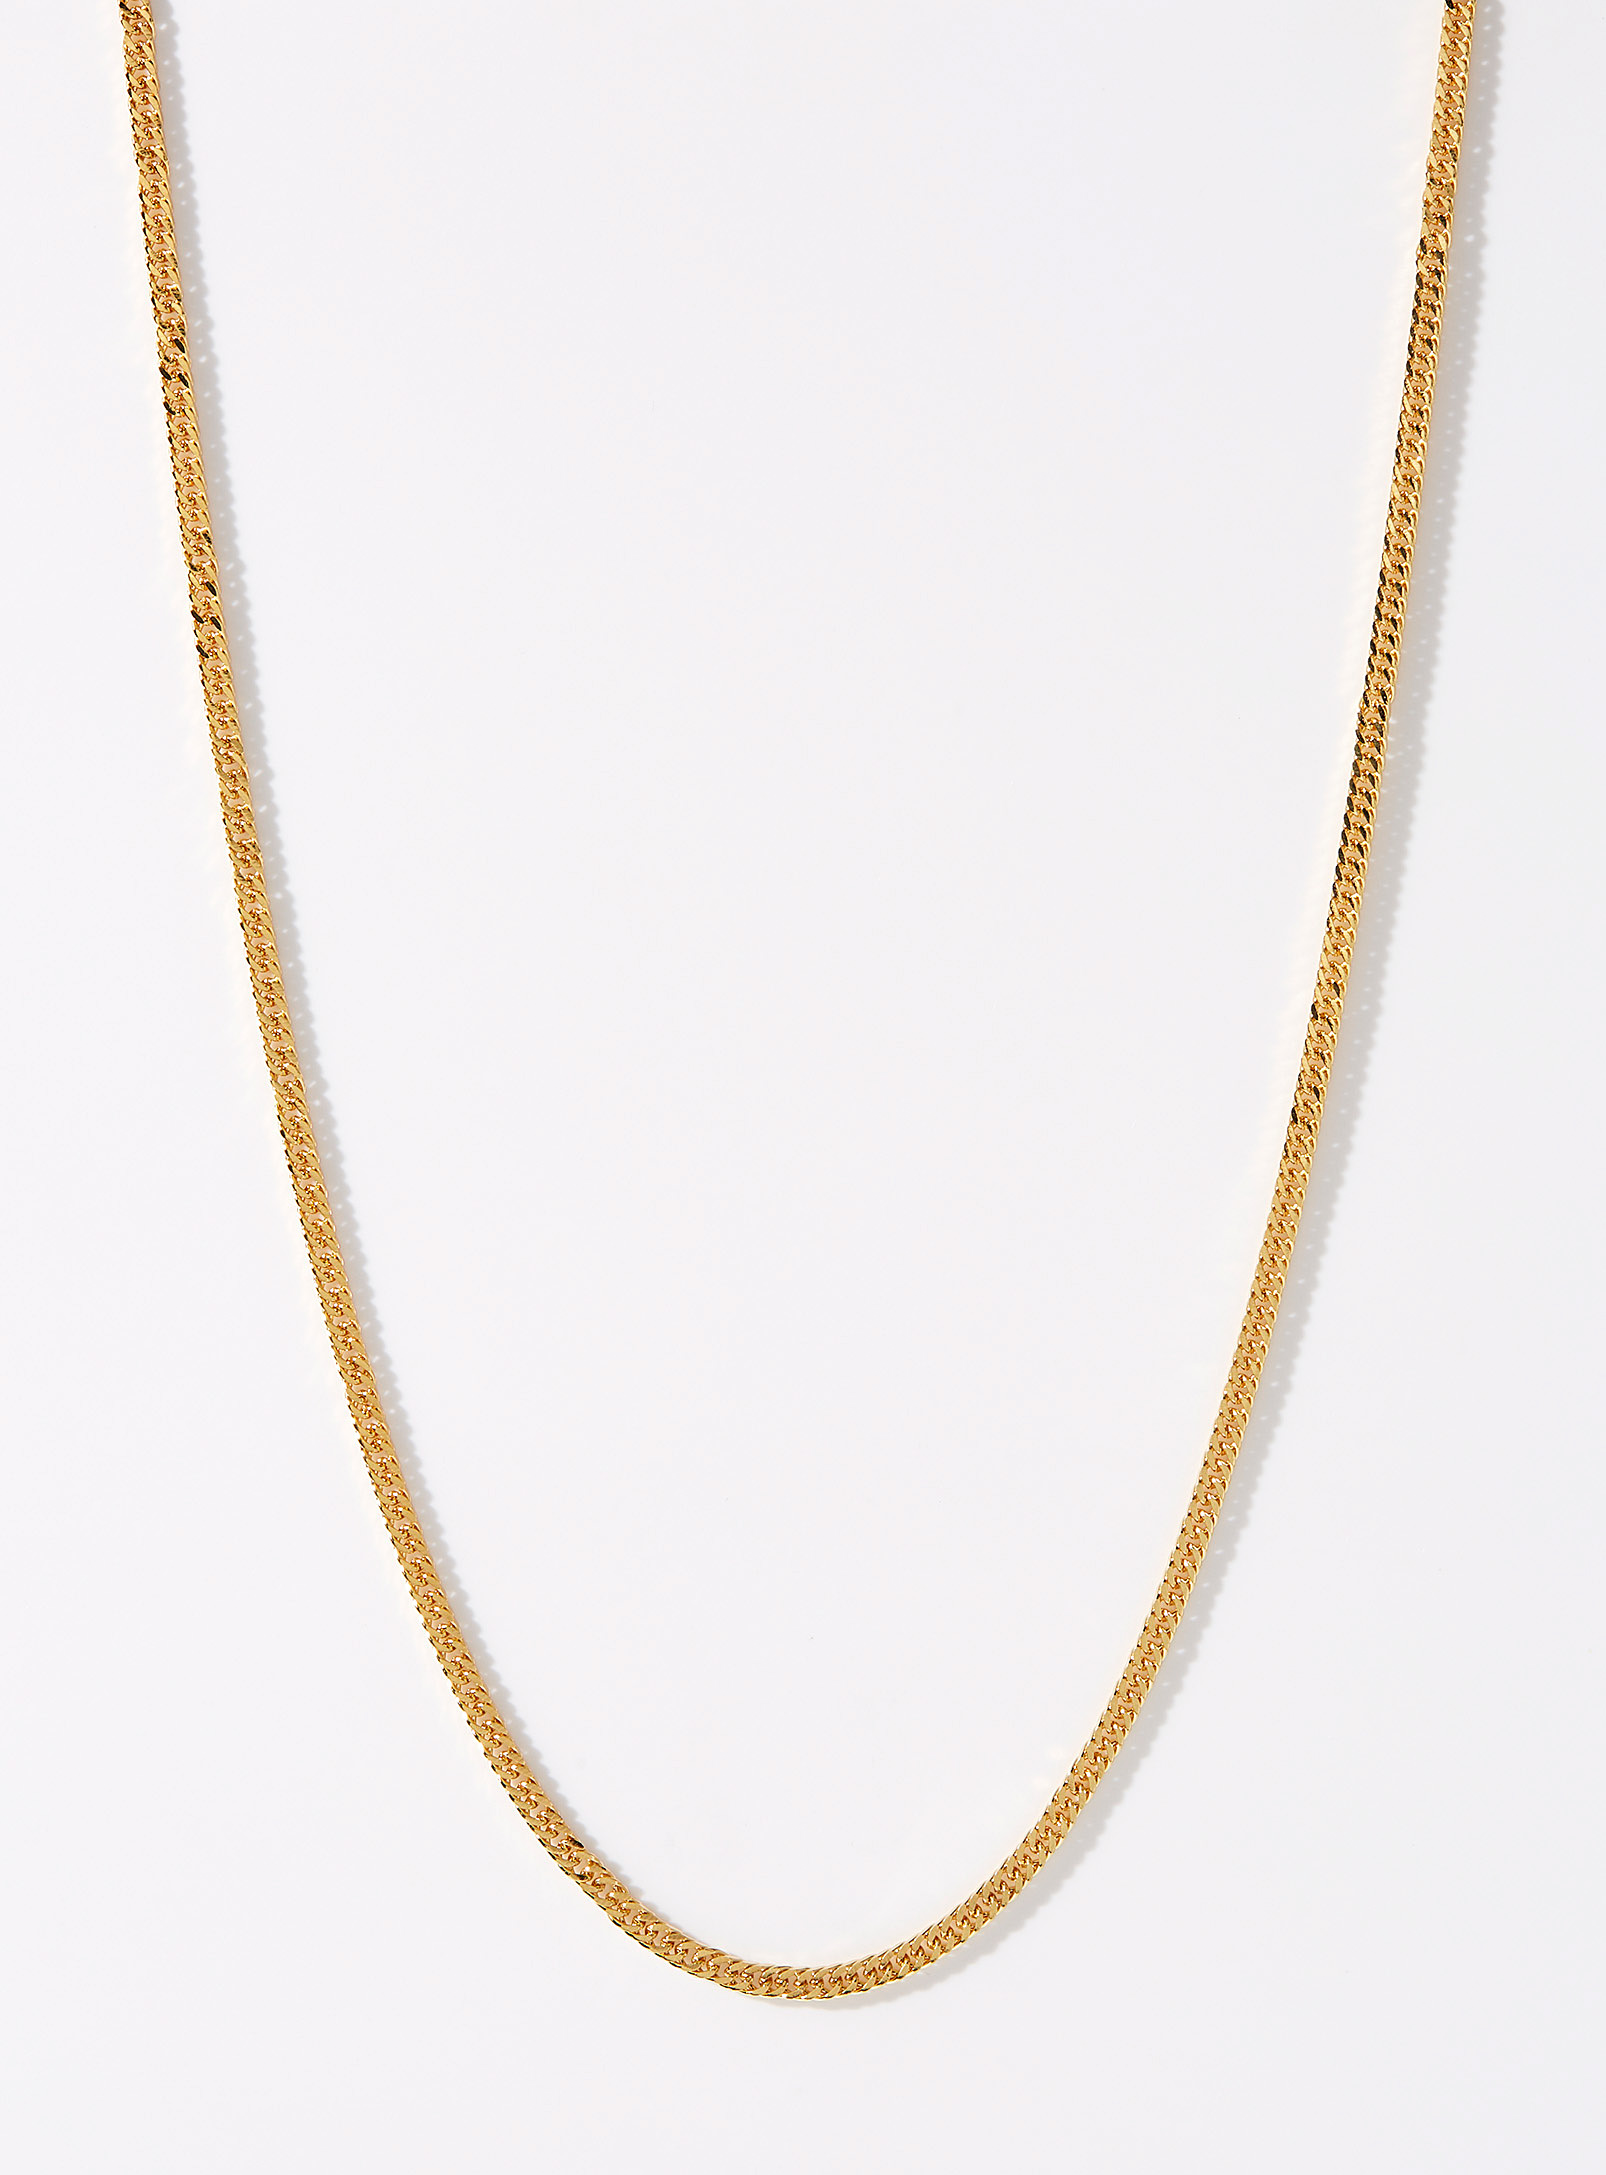 Le 31 - Men's Fine minimalist golden chain